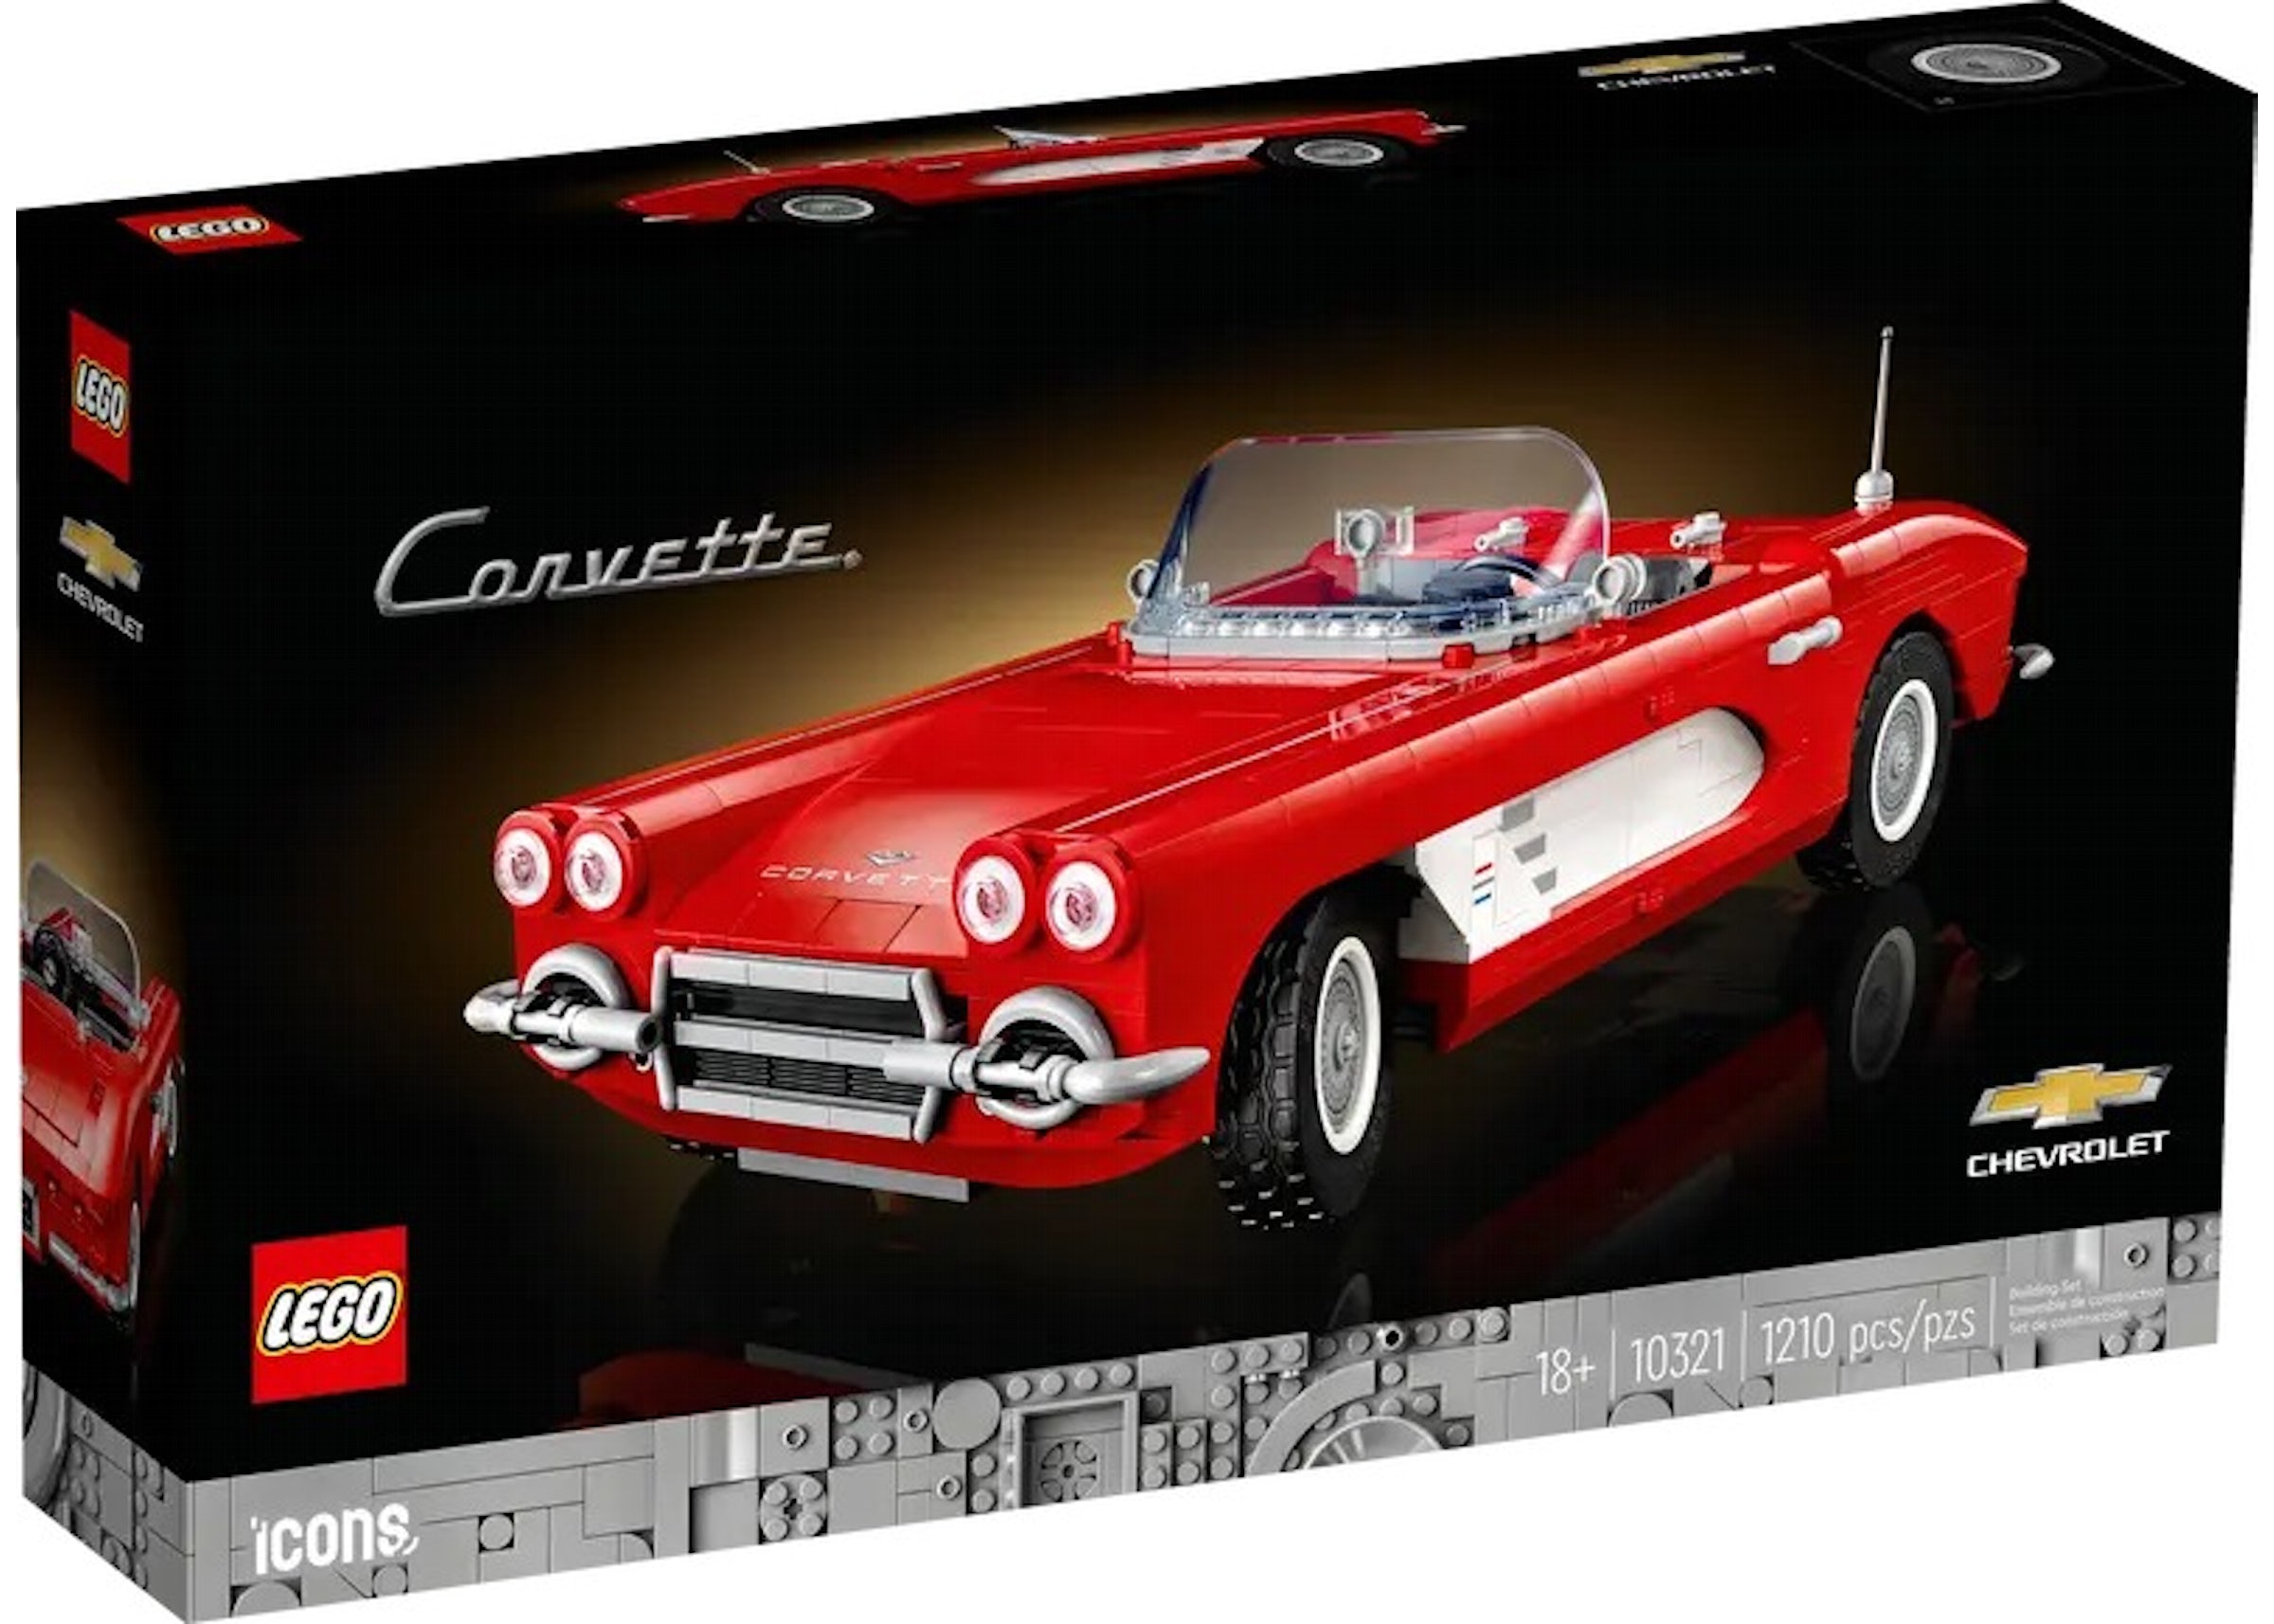 LEGO Icons Corvette Set 10321 - US